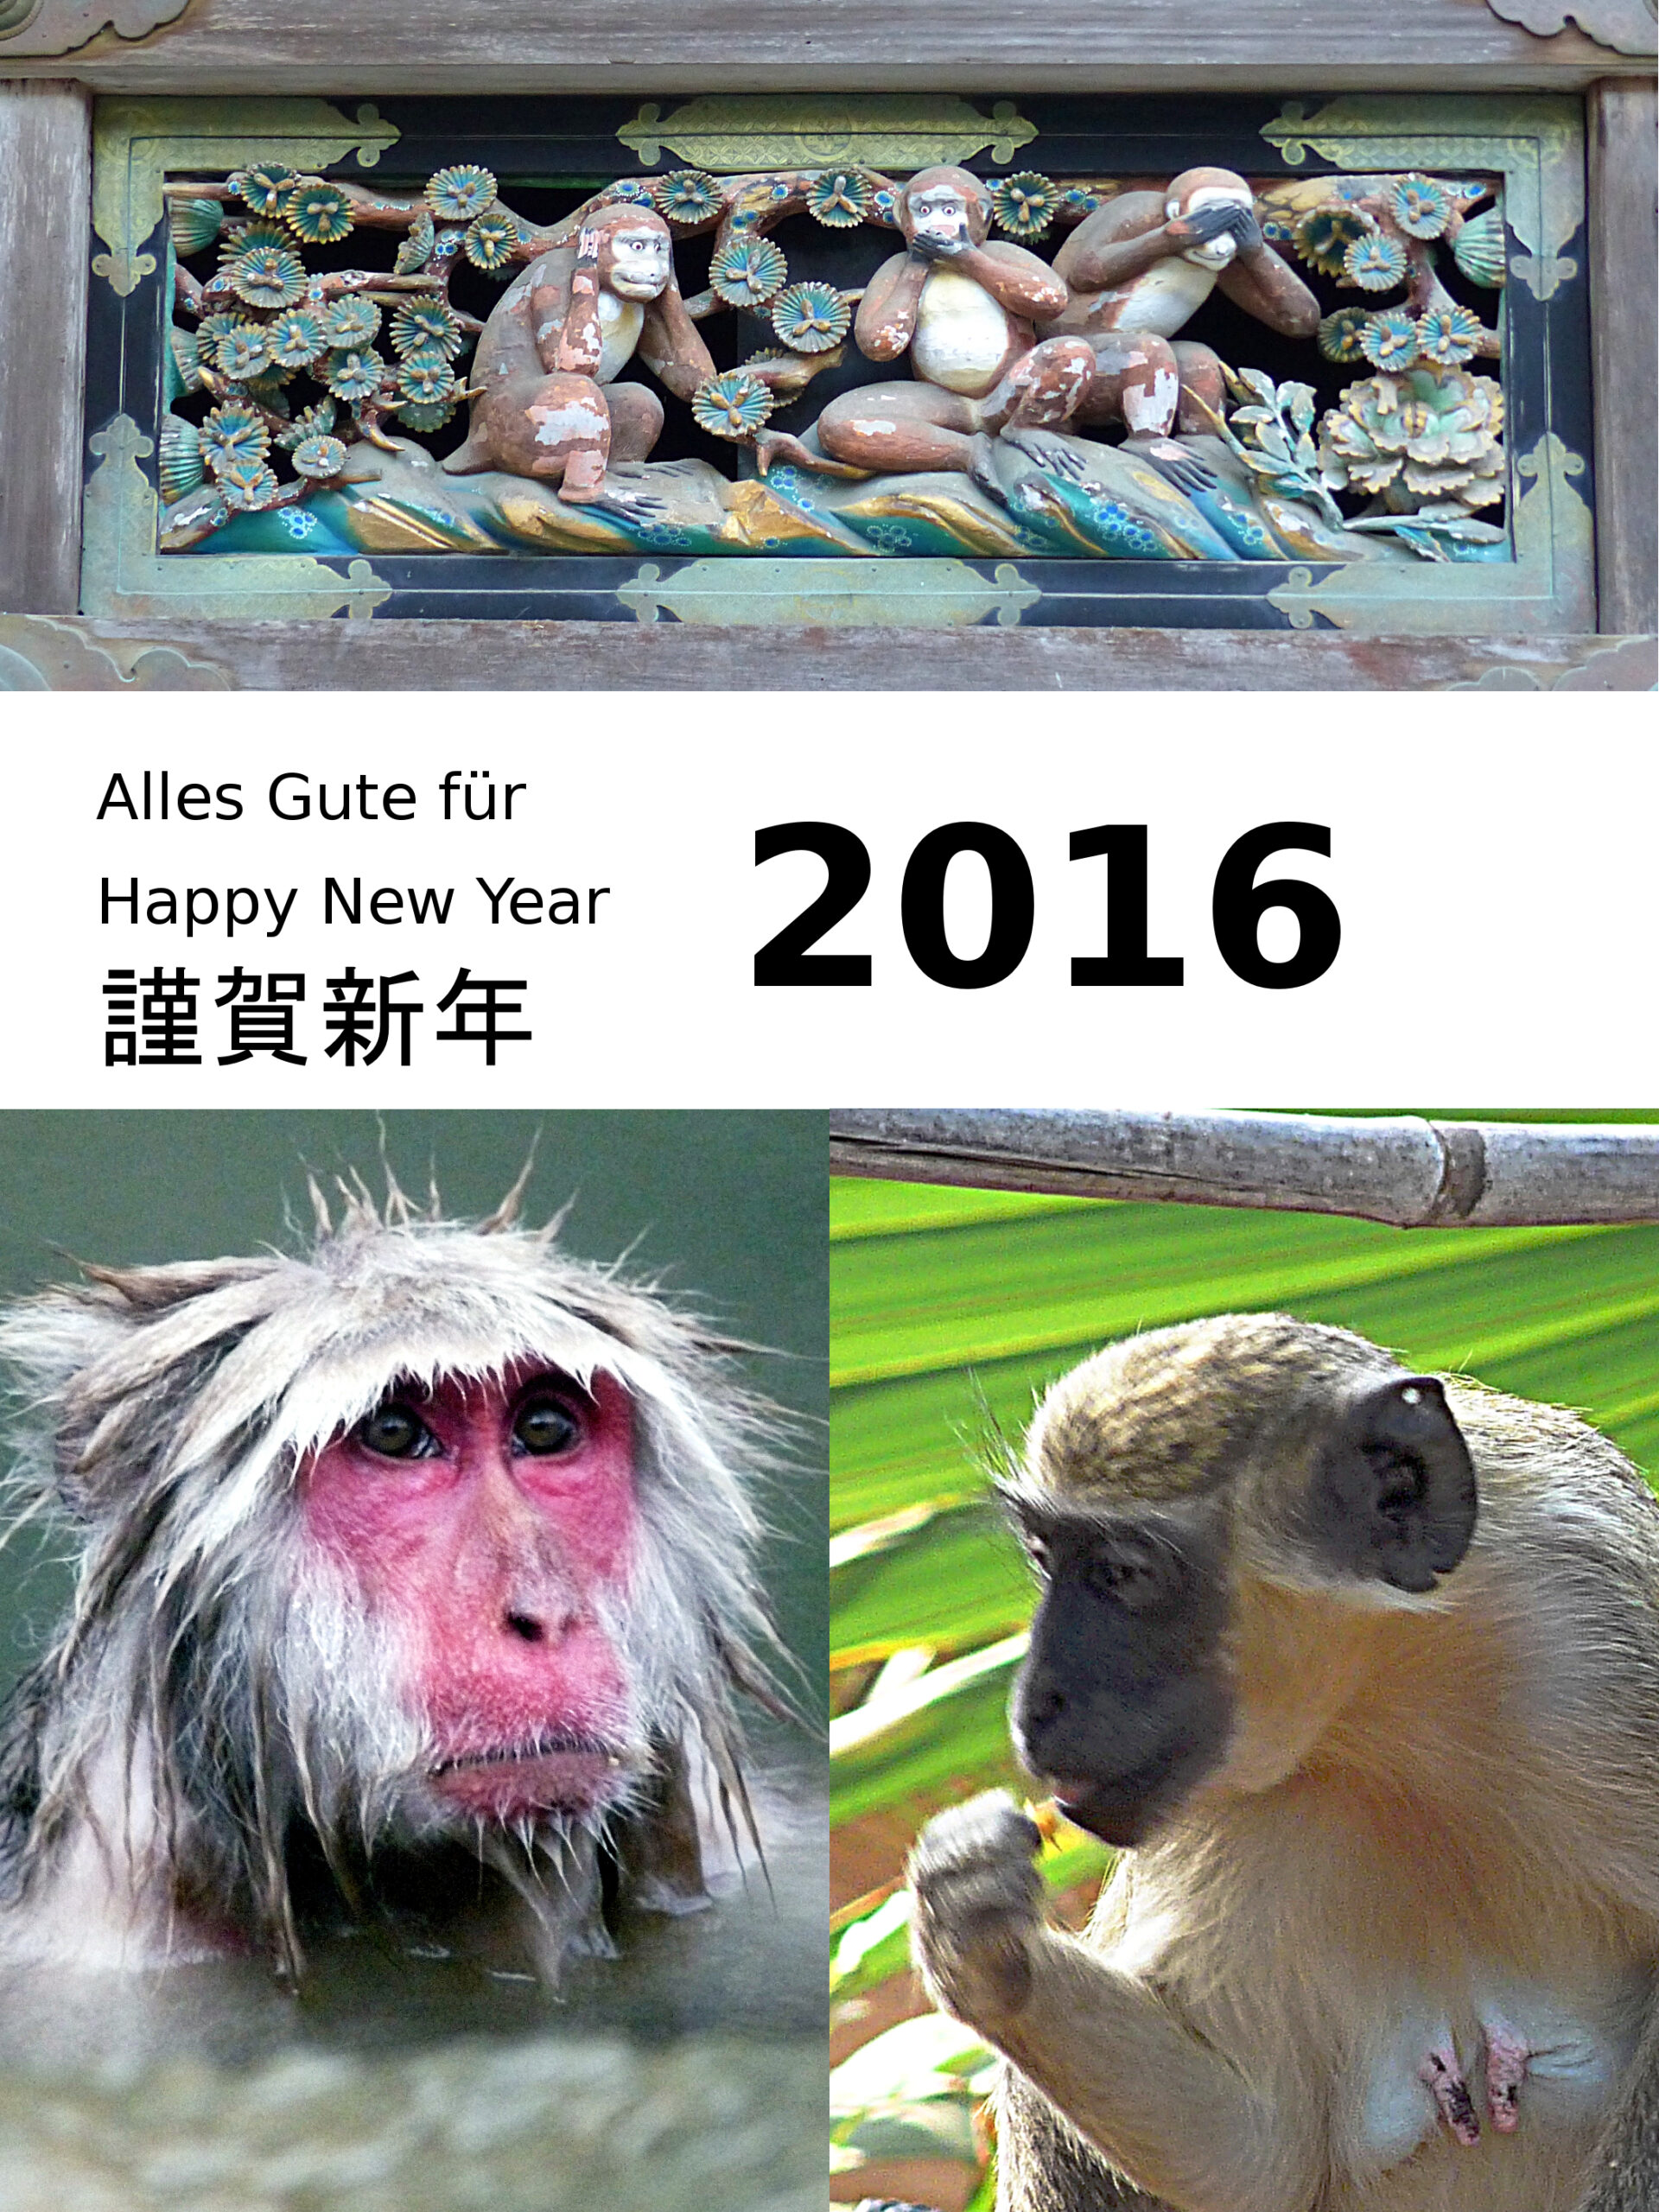 Happy 2016 card with monkeys